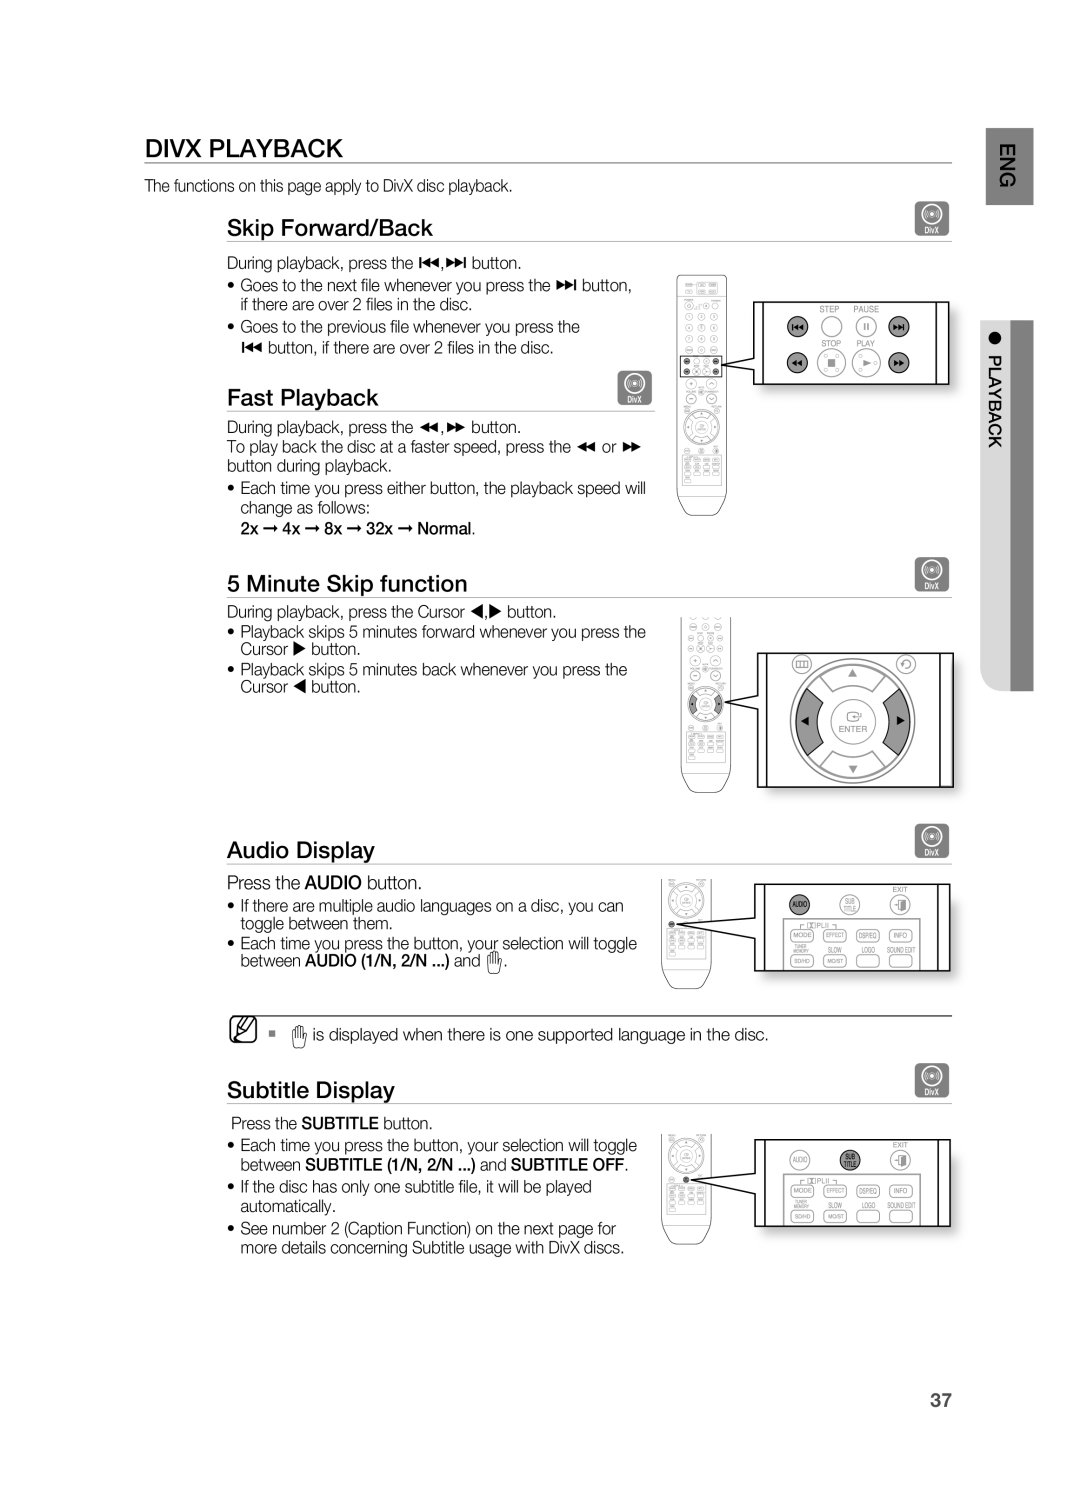 Samsung AH68-02055S manual D D D, DiVX PLayBaCK, Skip forward/Back, fast Playback, minute Skip function, audio Display 